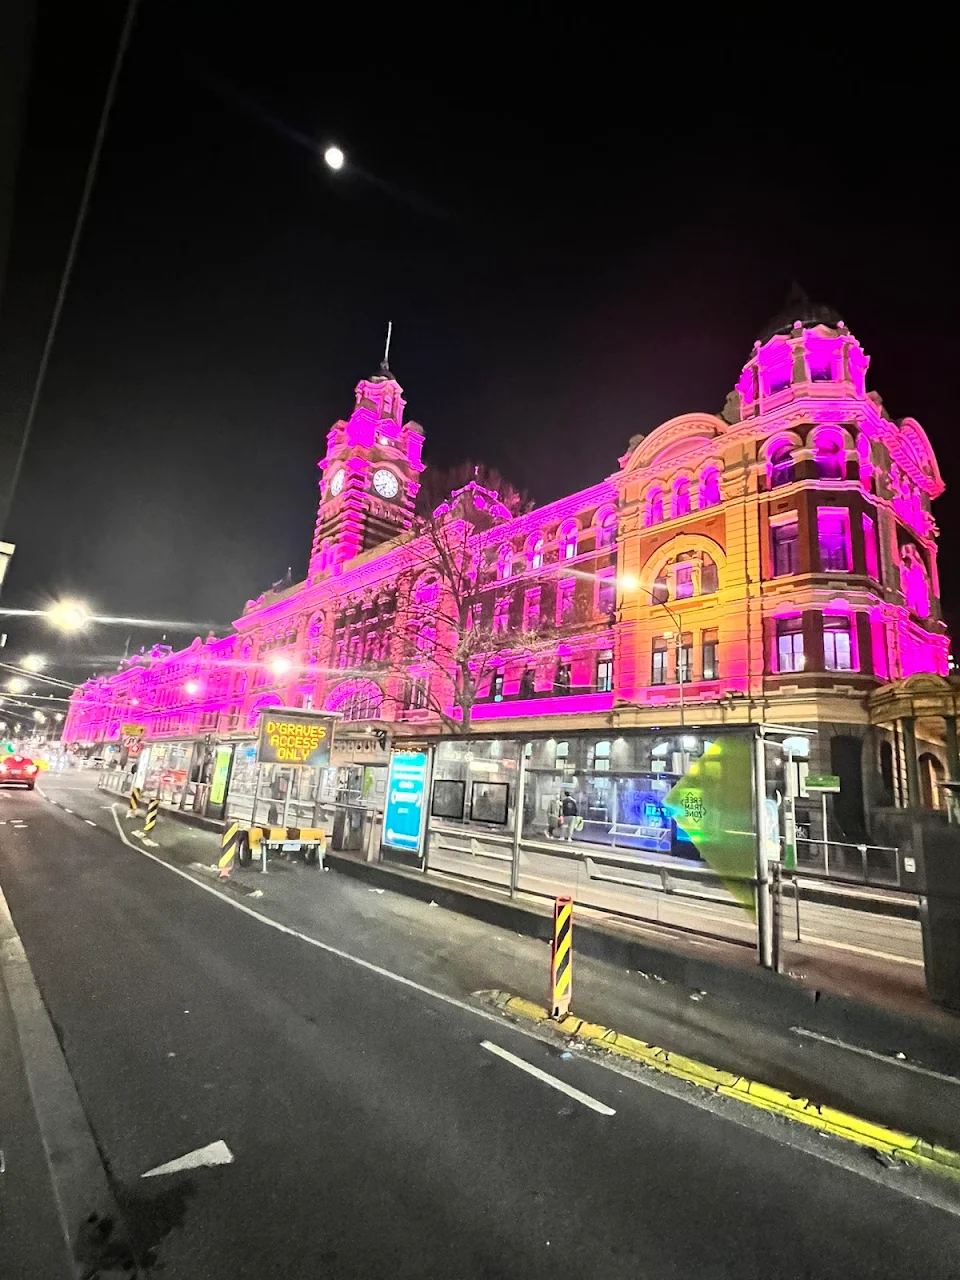 Flinders St Station, Melbourne Australia lit up pink tonight in honour of Olivia Newton John. RIP